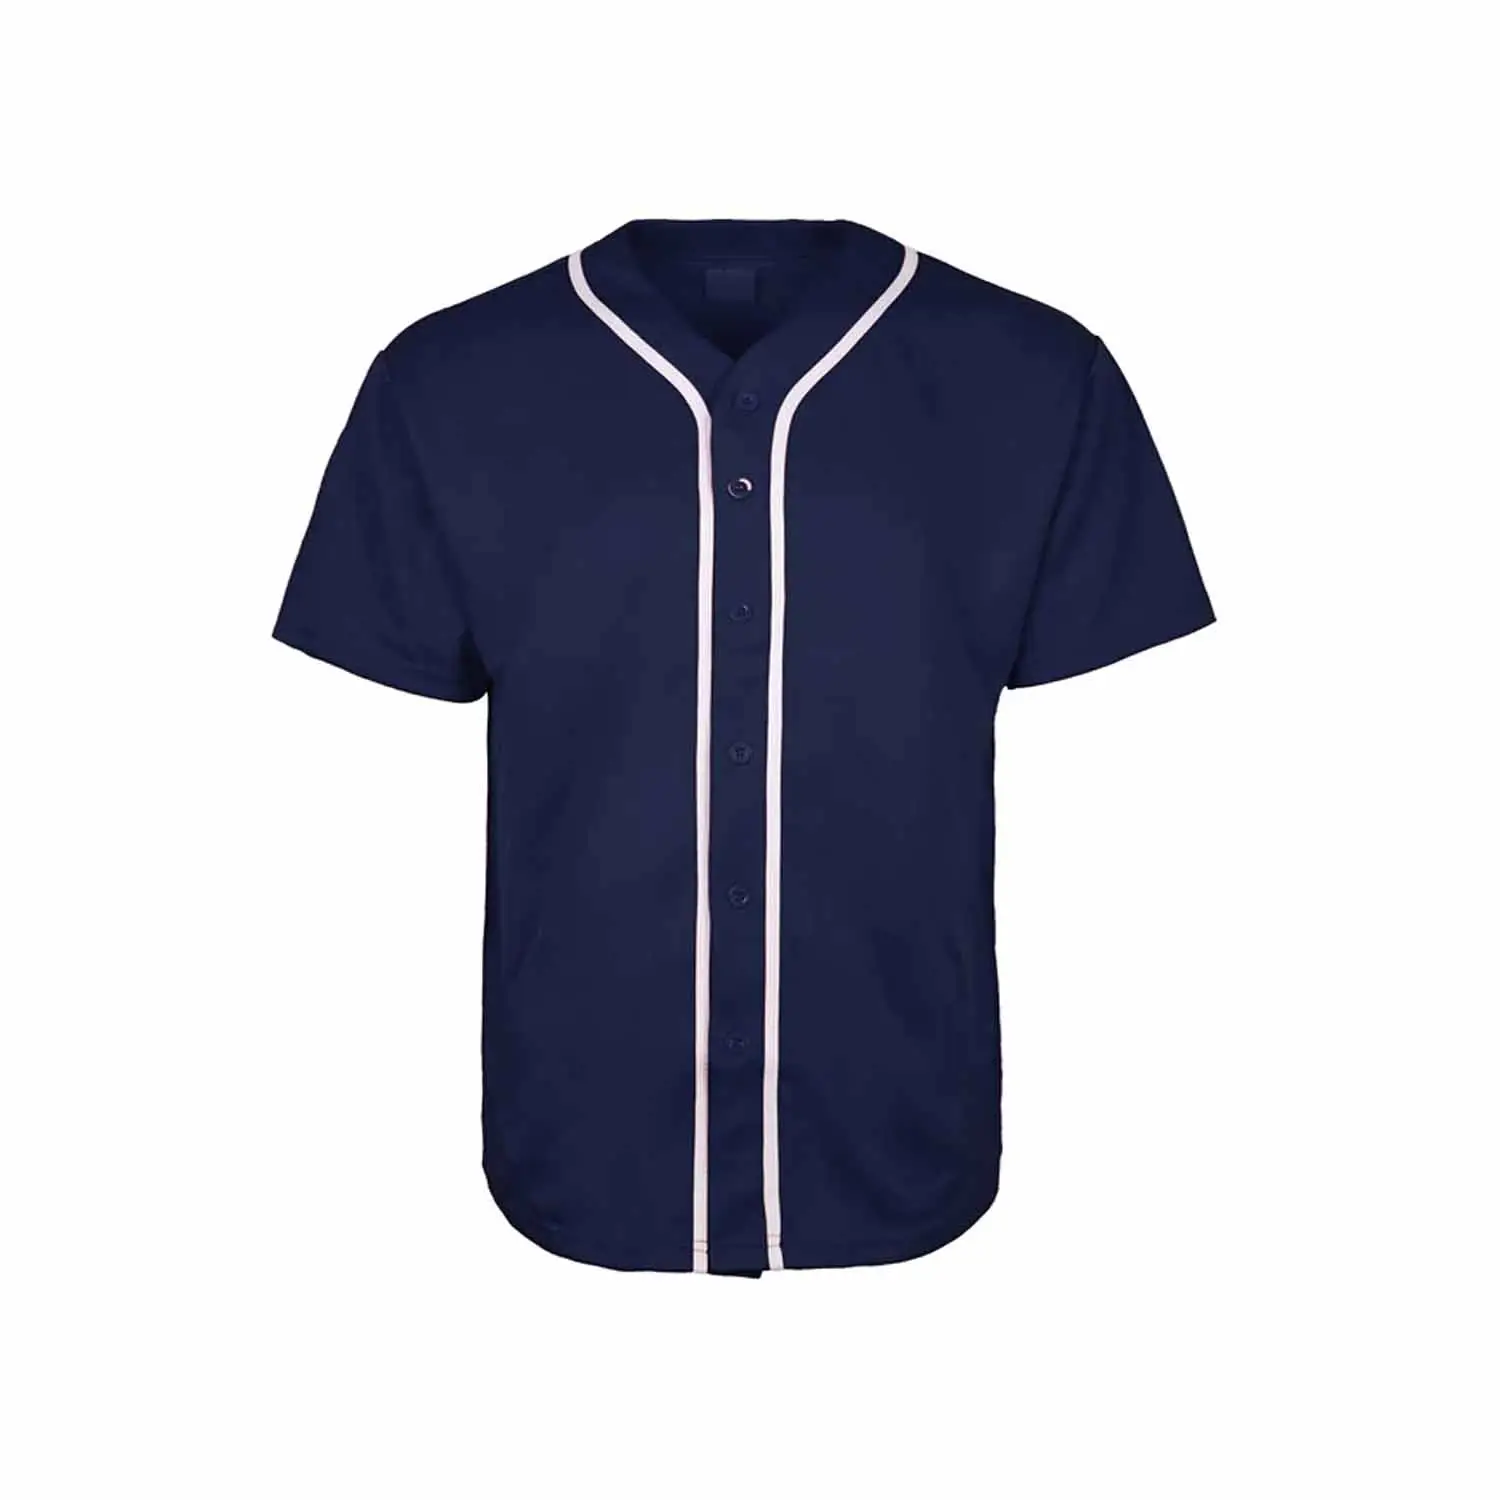 Baseballuniformen Neuzugang Trainingsbekleidung Baseball Softballuniform Set 100 % Polyester Sublimationsbaseballuniform